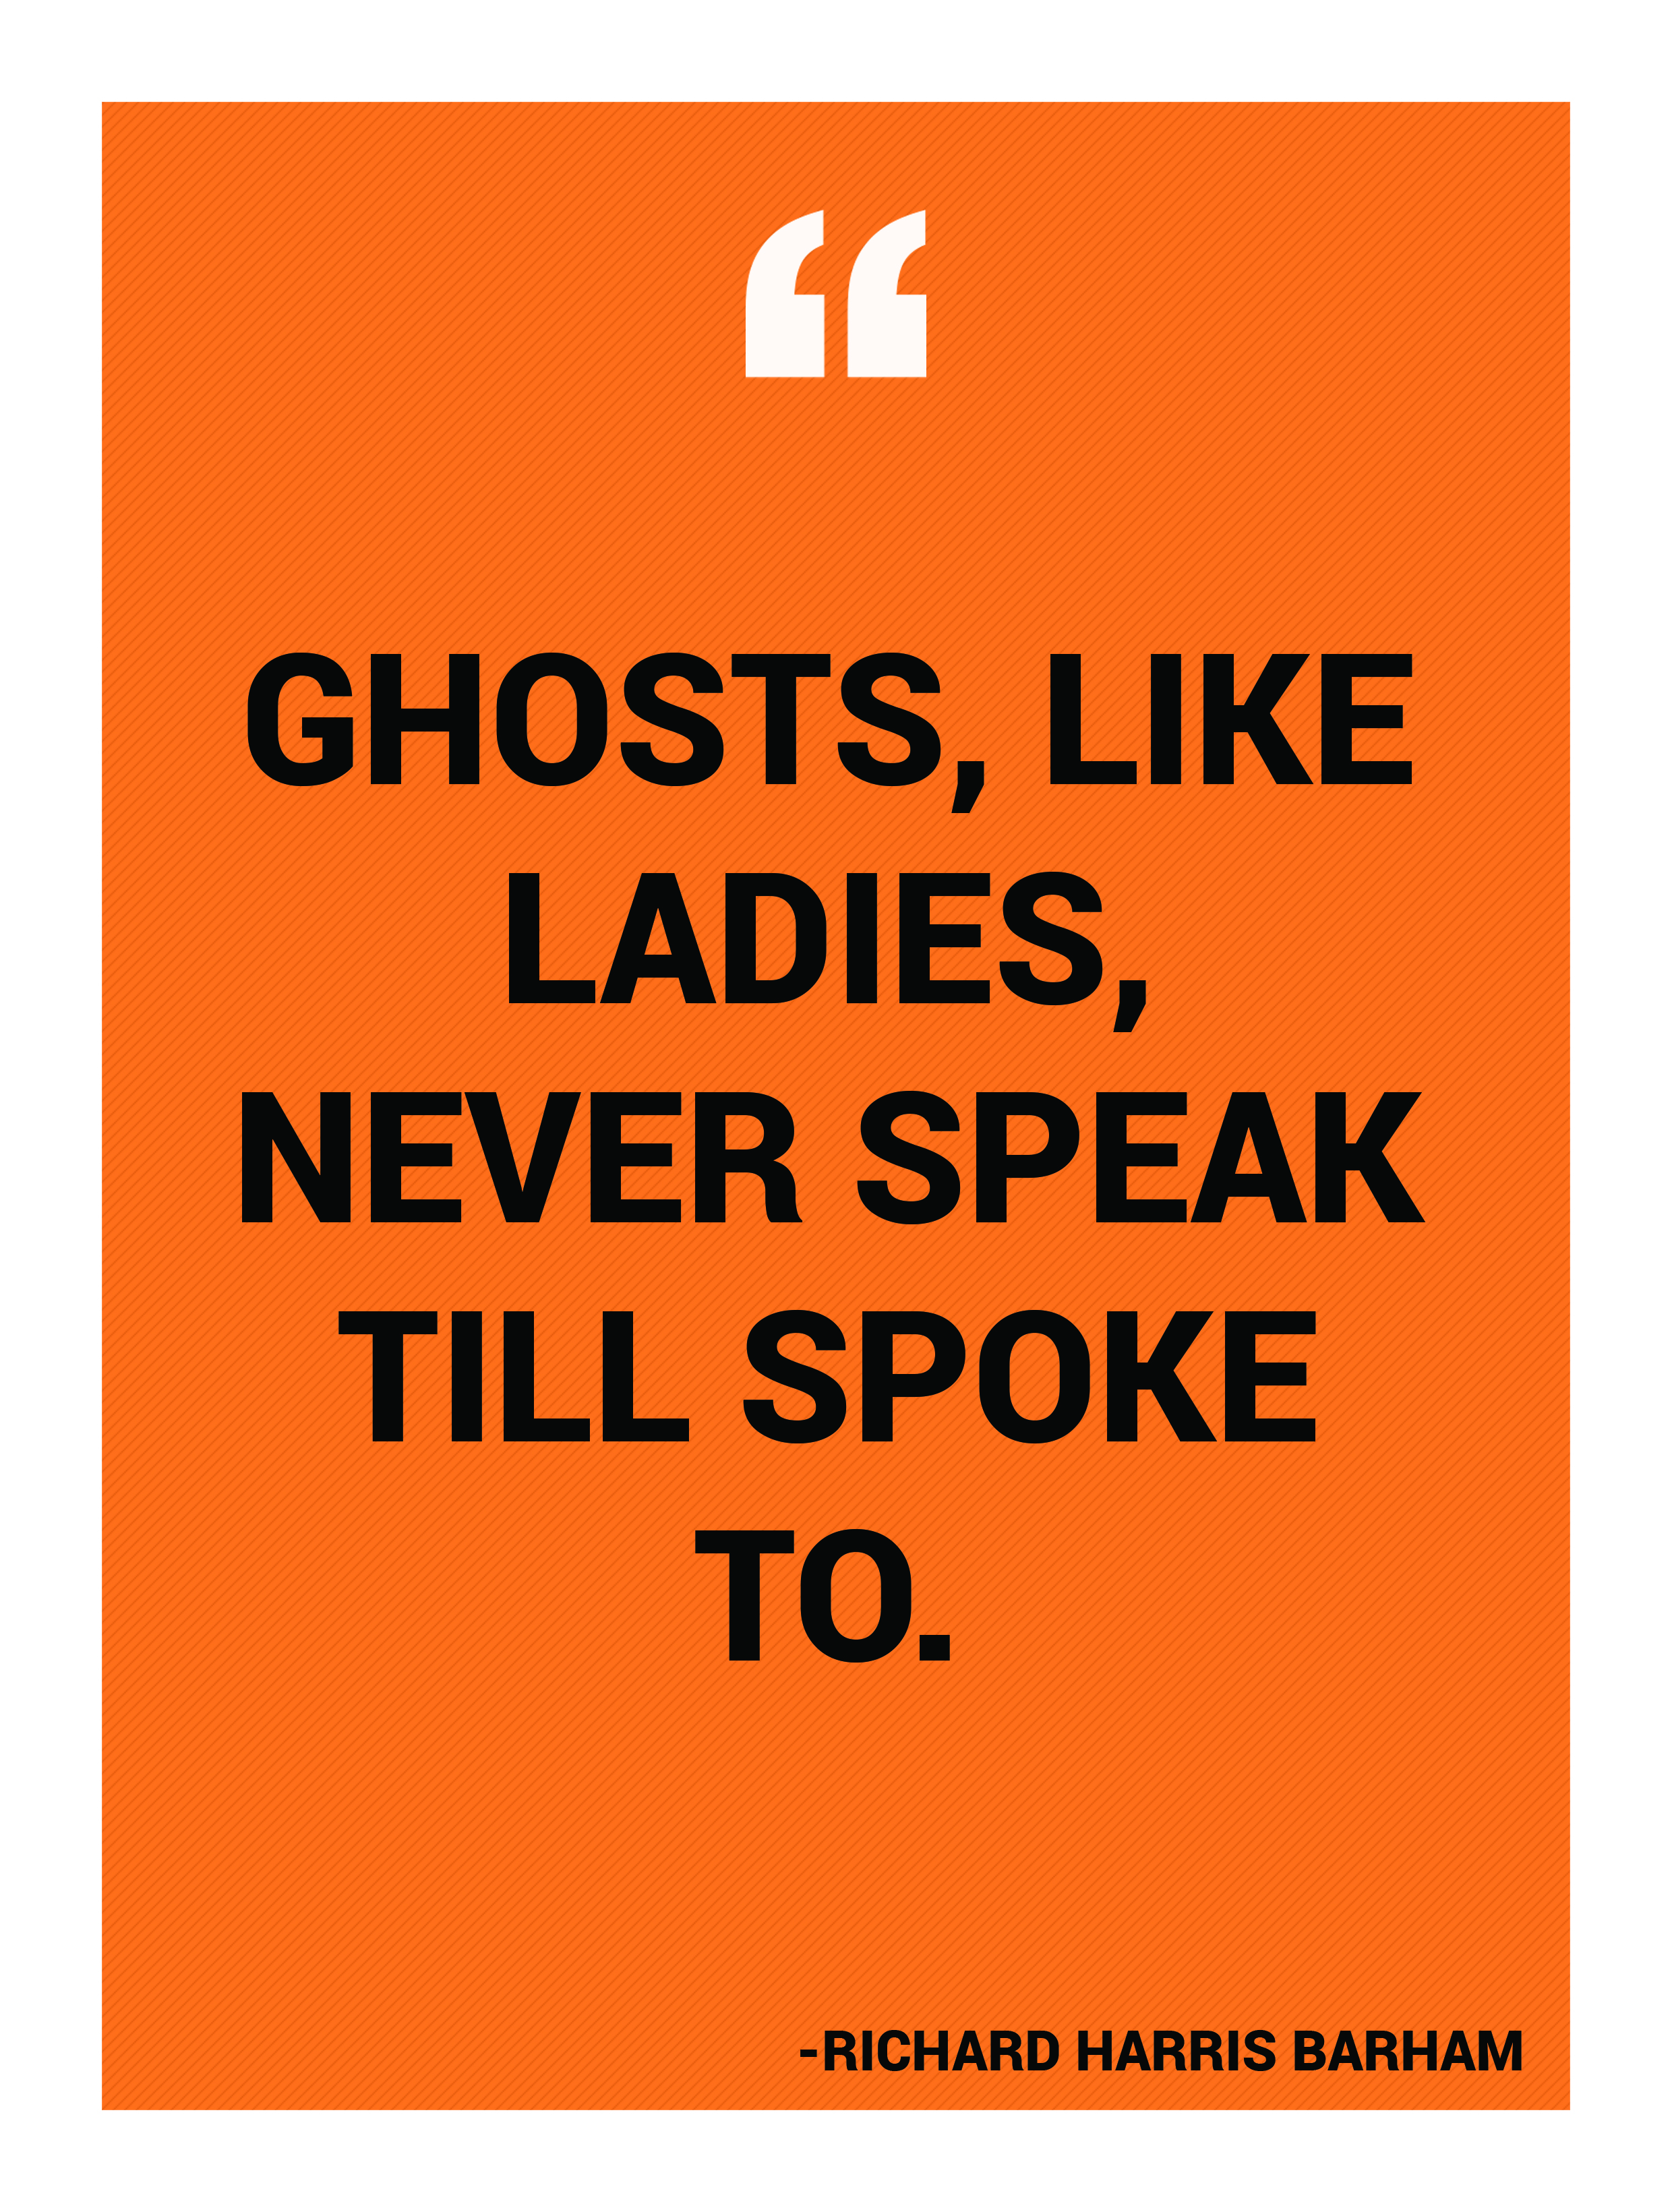 “Ghosts, like ladies, never speak till spoke to.” -Richard Harris Barham